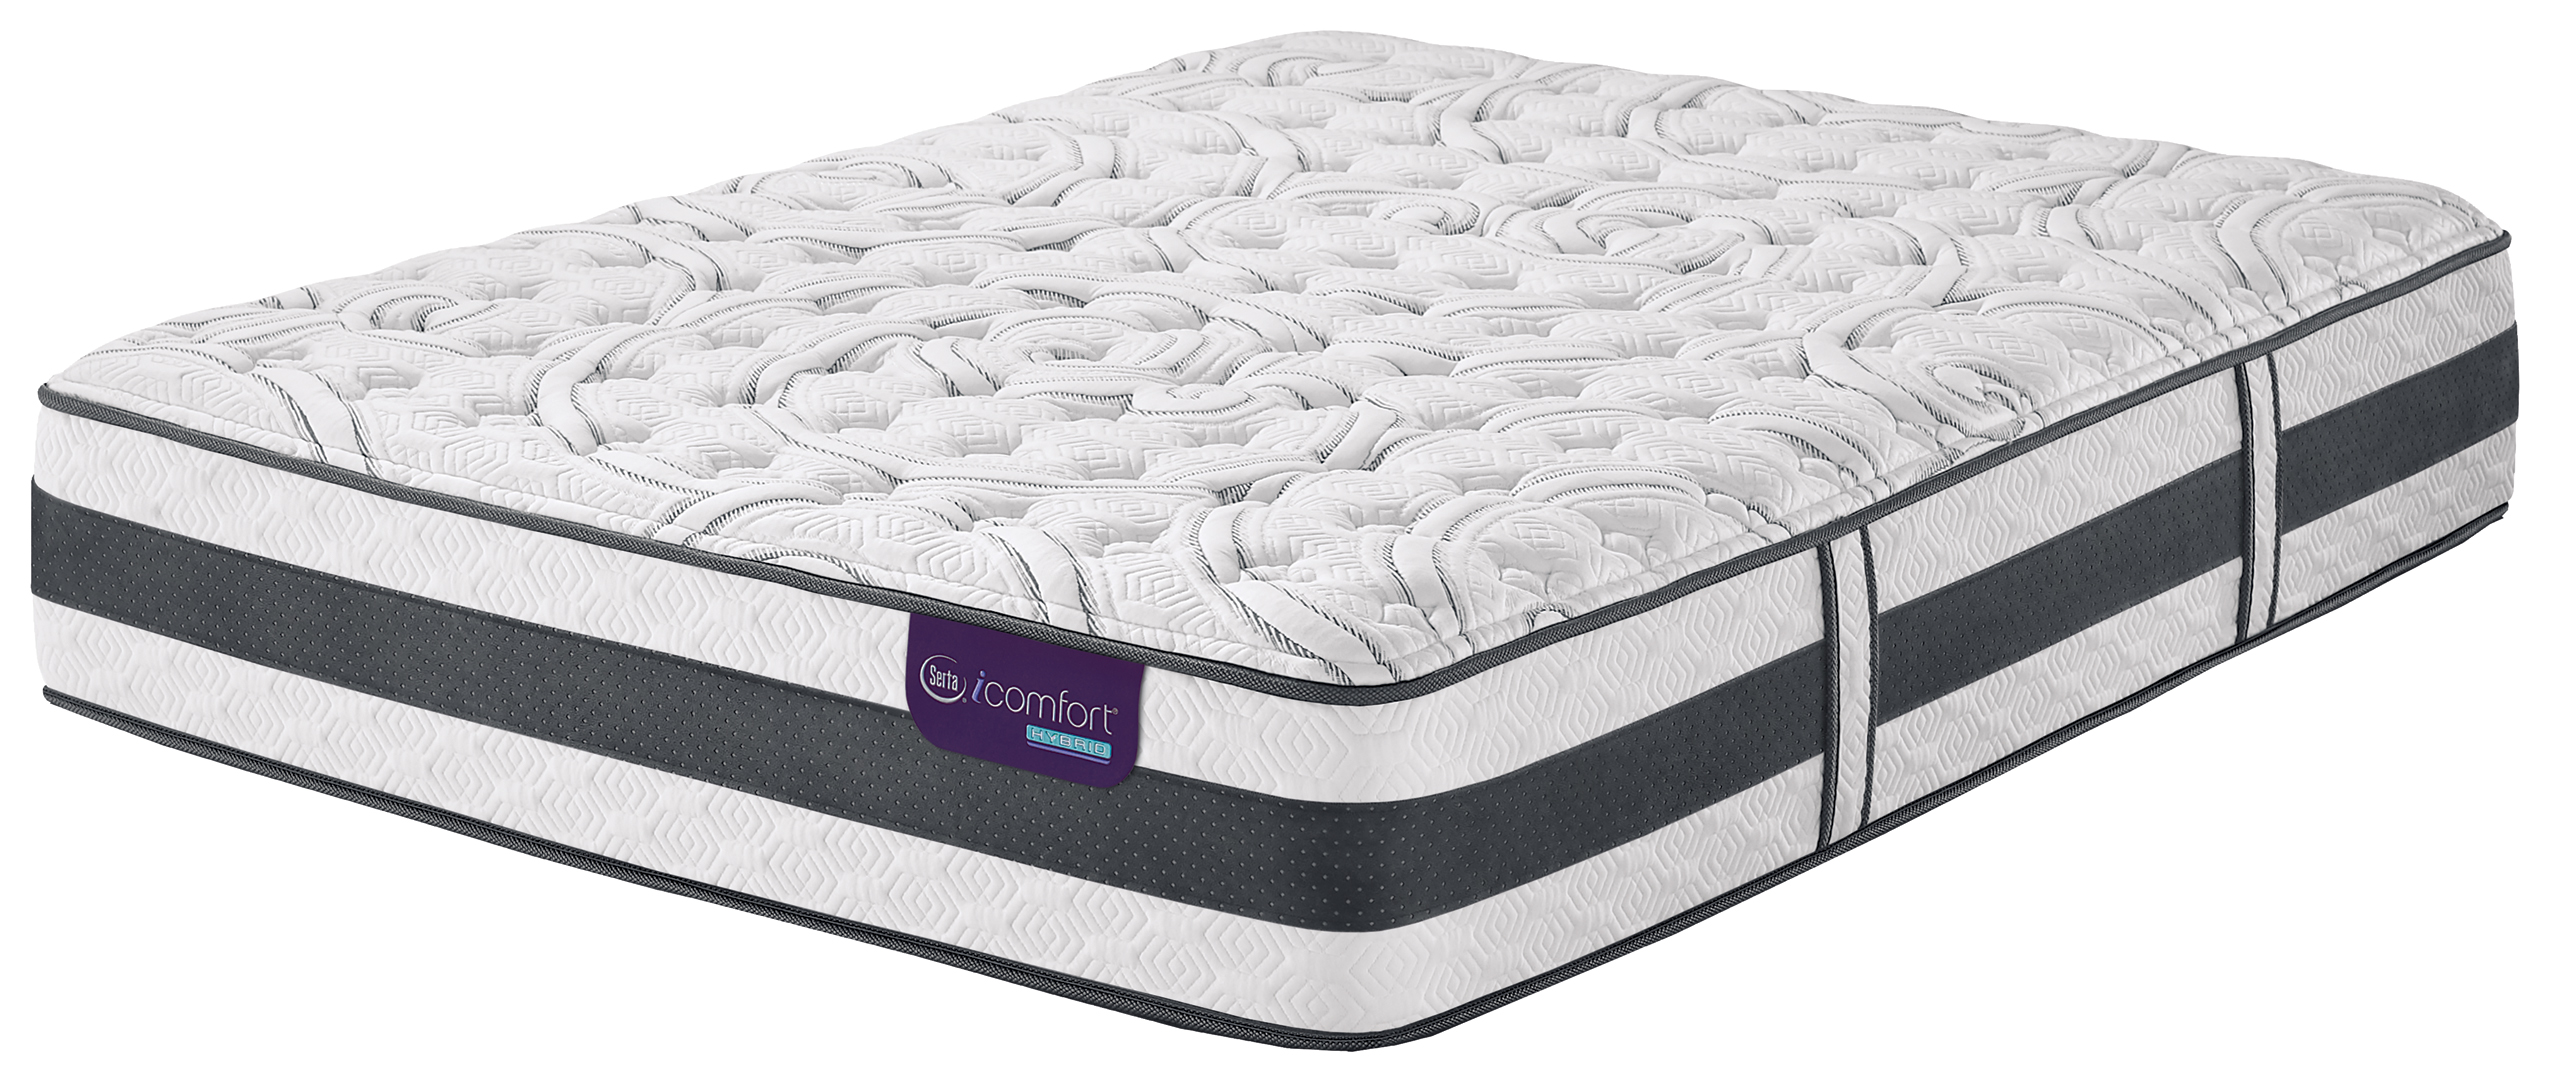 icomfort hybrid applause ii queen mattress